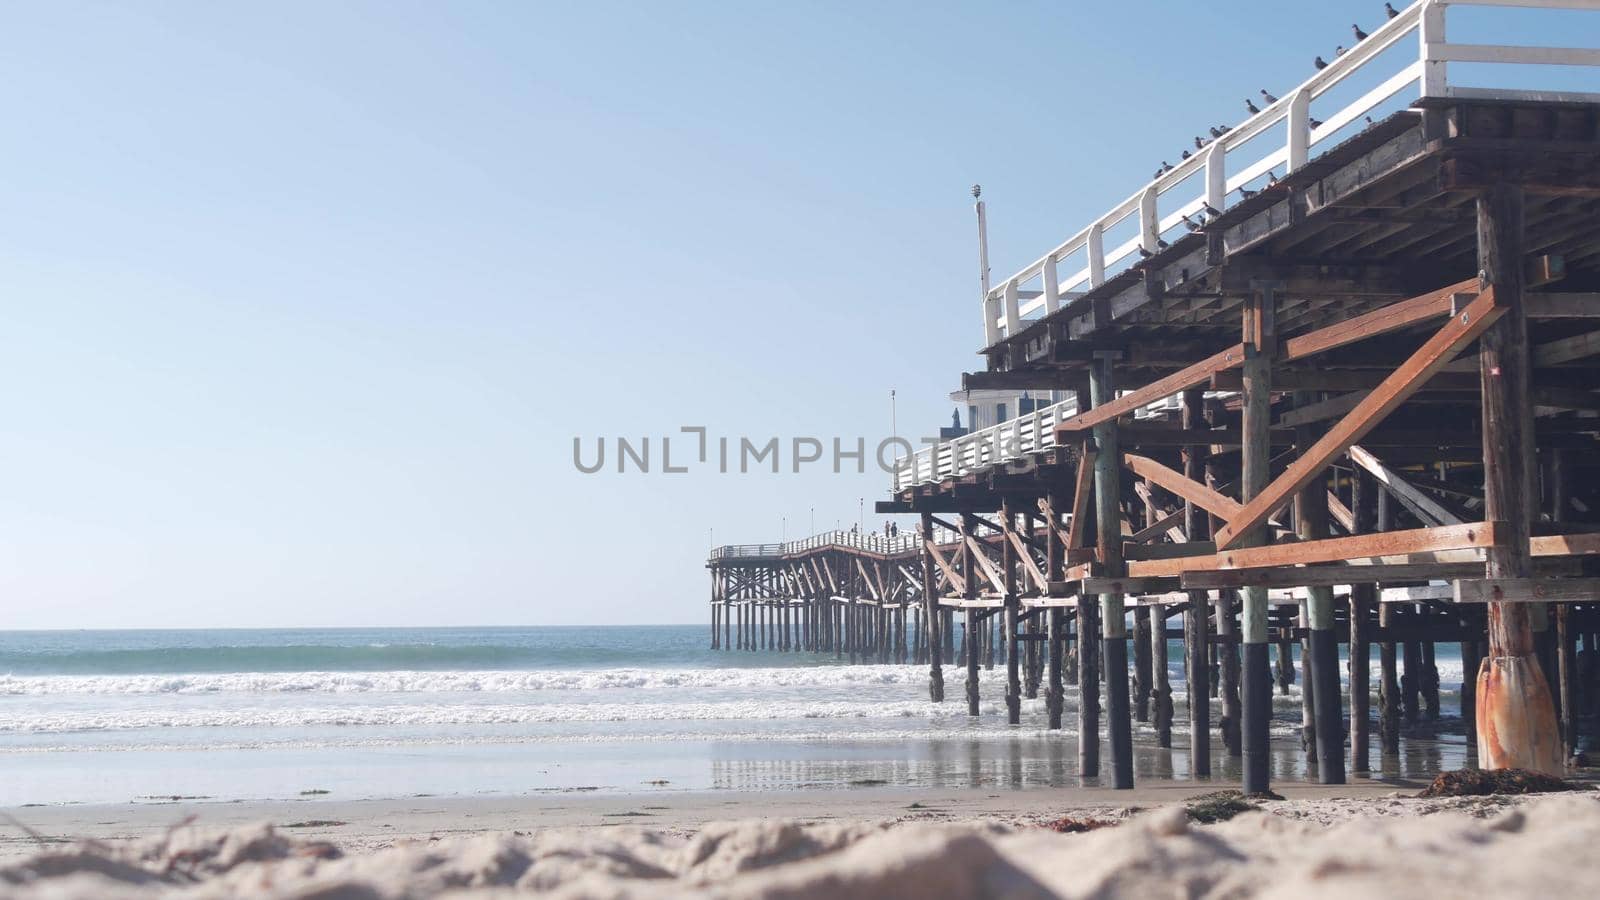 Below wooden Crystal pier on piles, ocean beach water waves, California USA. by DogoraSun